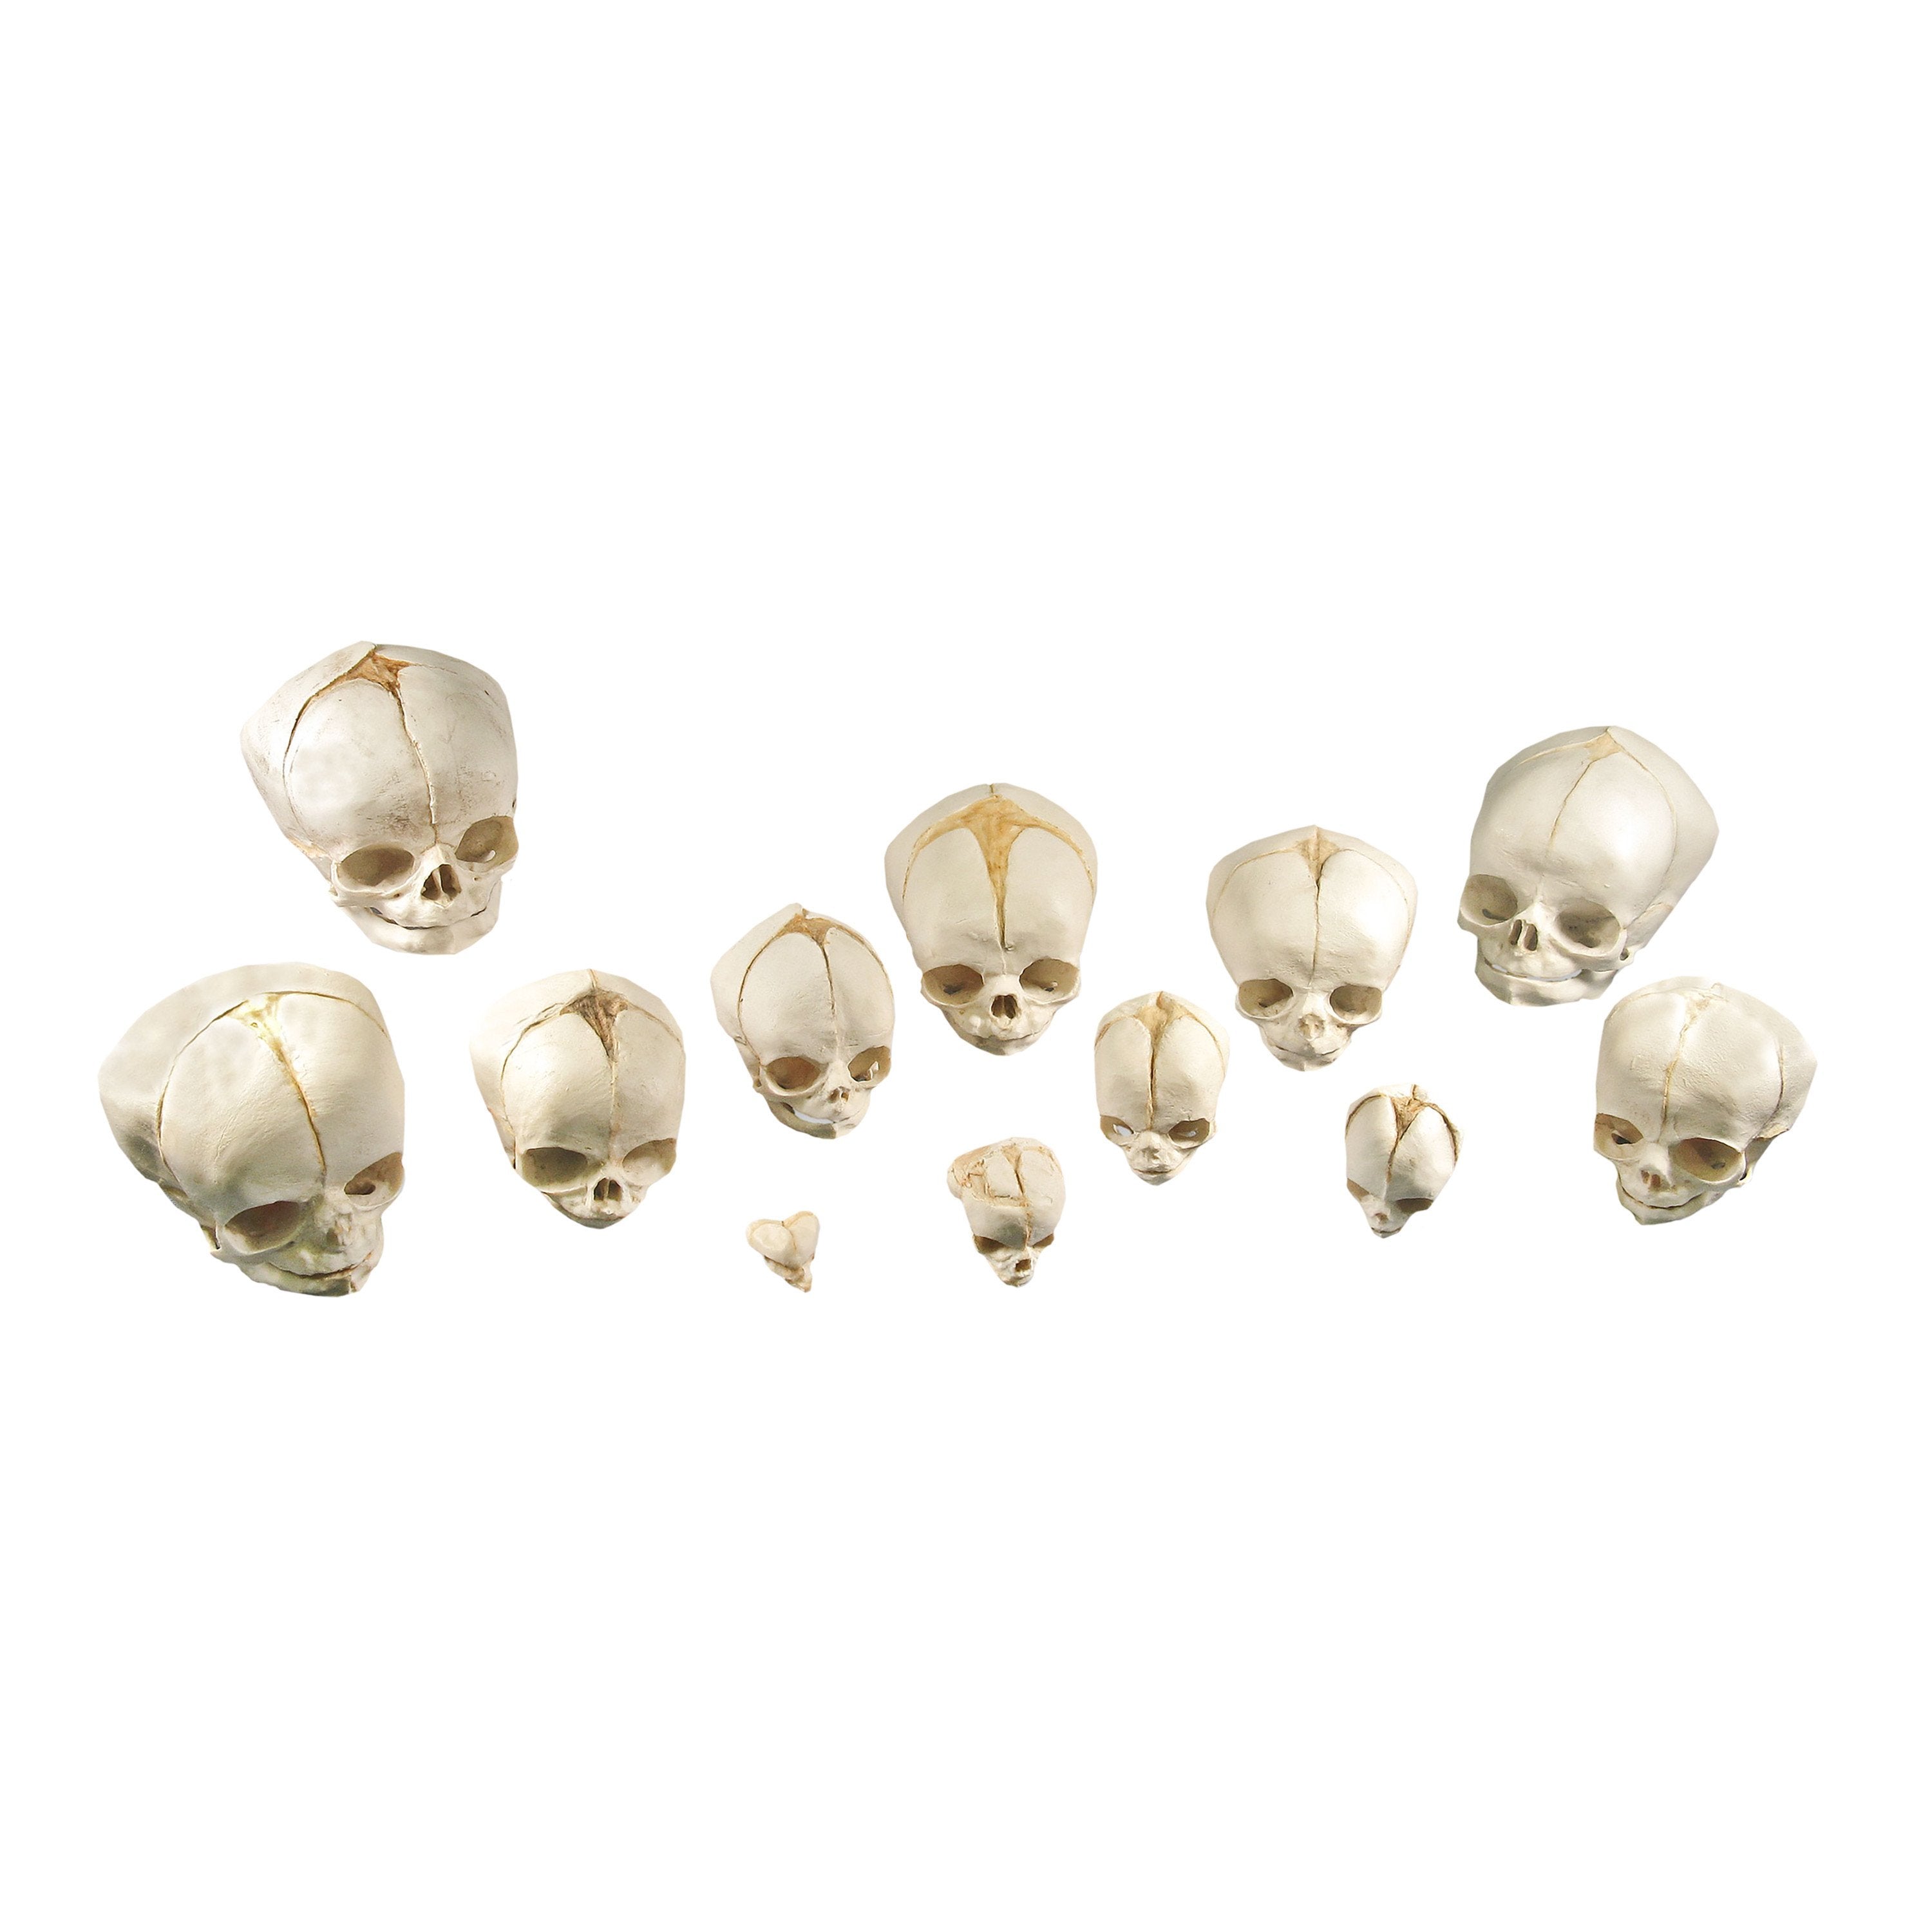 Real Human Fetal Skeleton On Stand — Skulls Unlimited International, Inc.